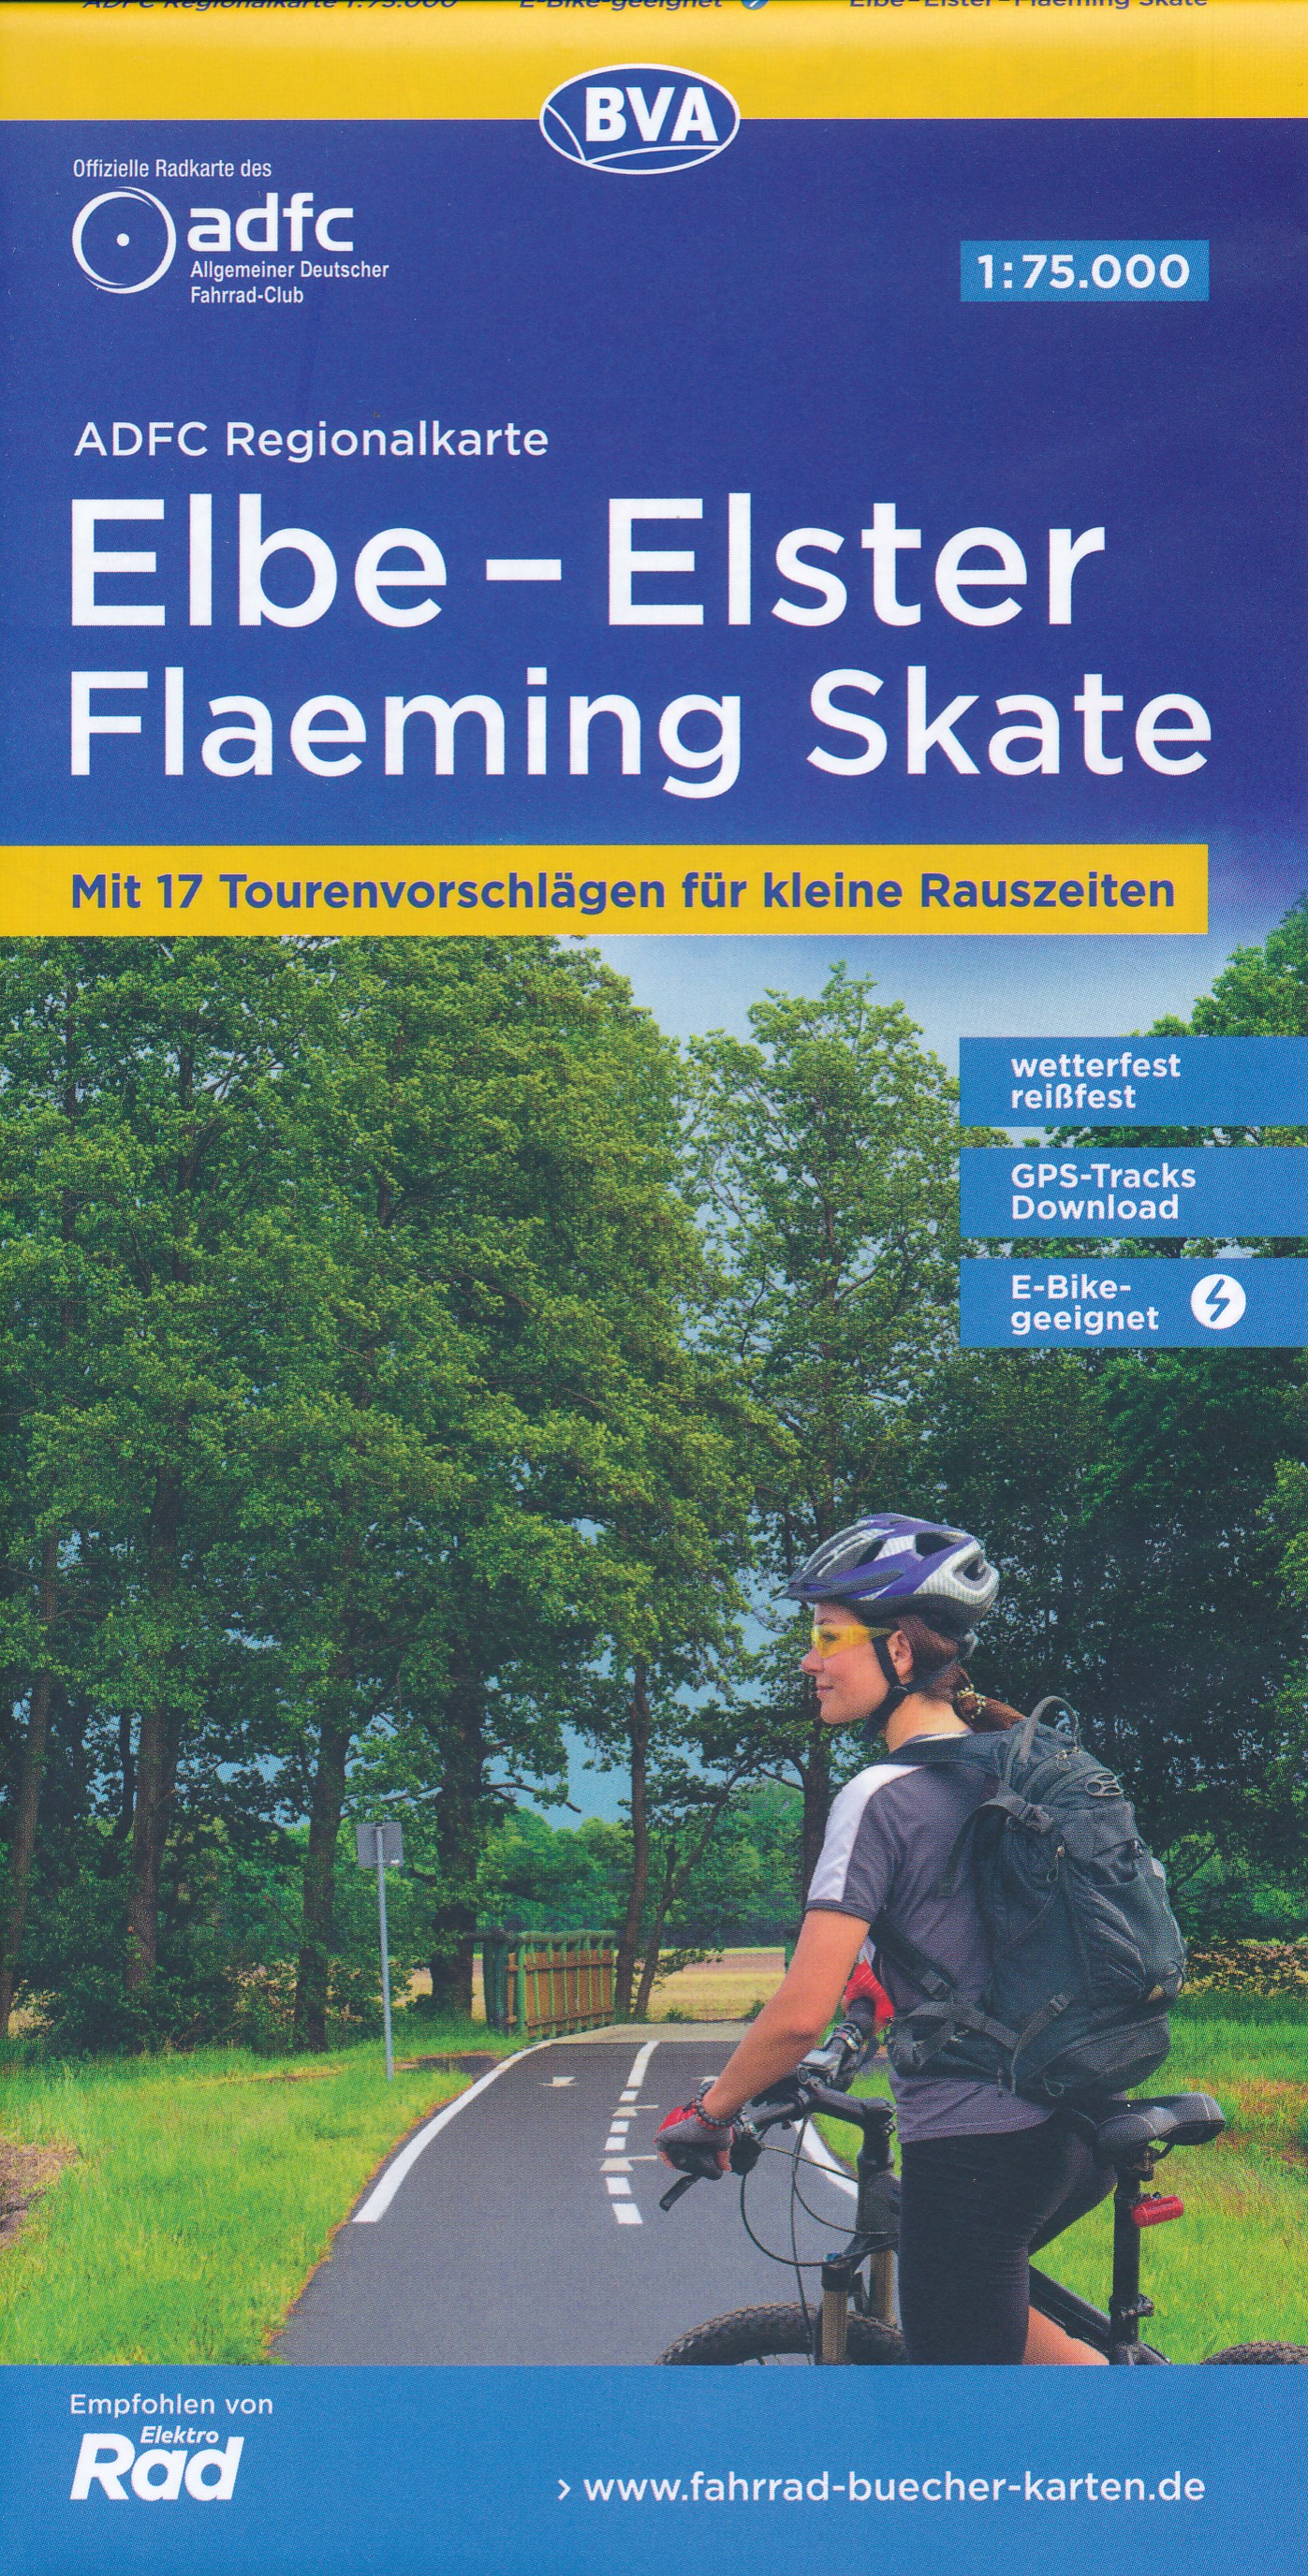 Online bestellen: Fietskaart ADFC Regionalkarte Elbe - Elster, Flaeming Skate | BVA BikeMedia